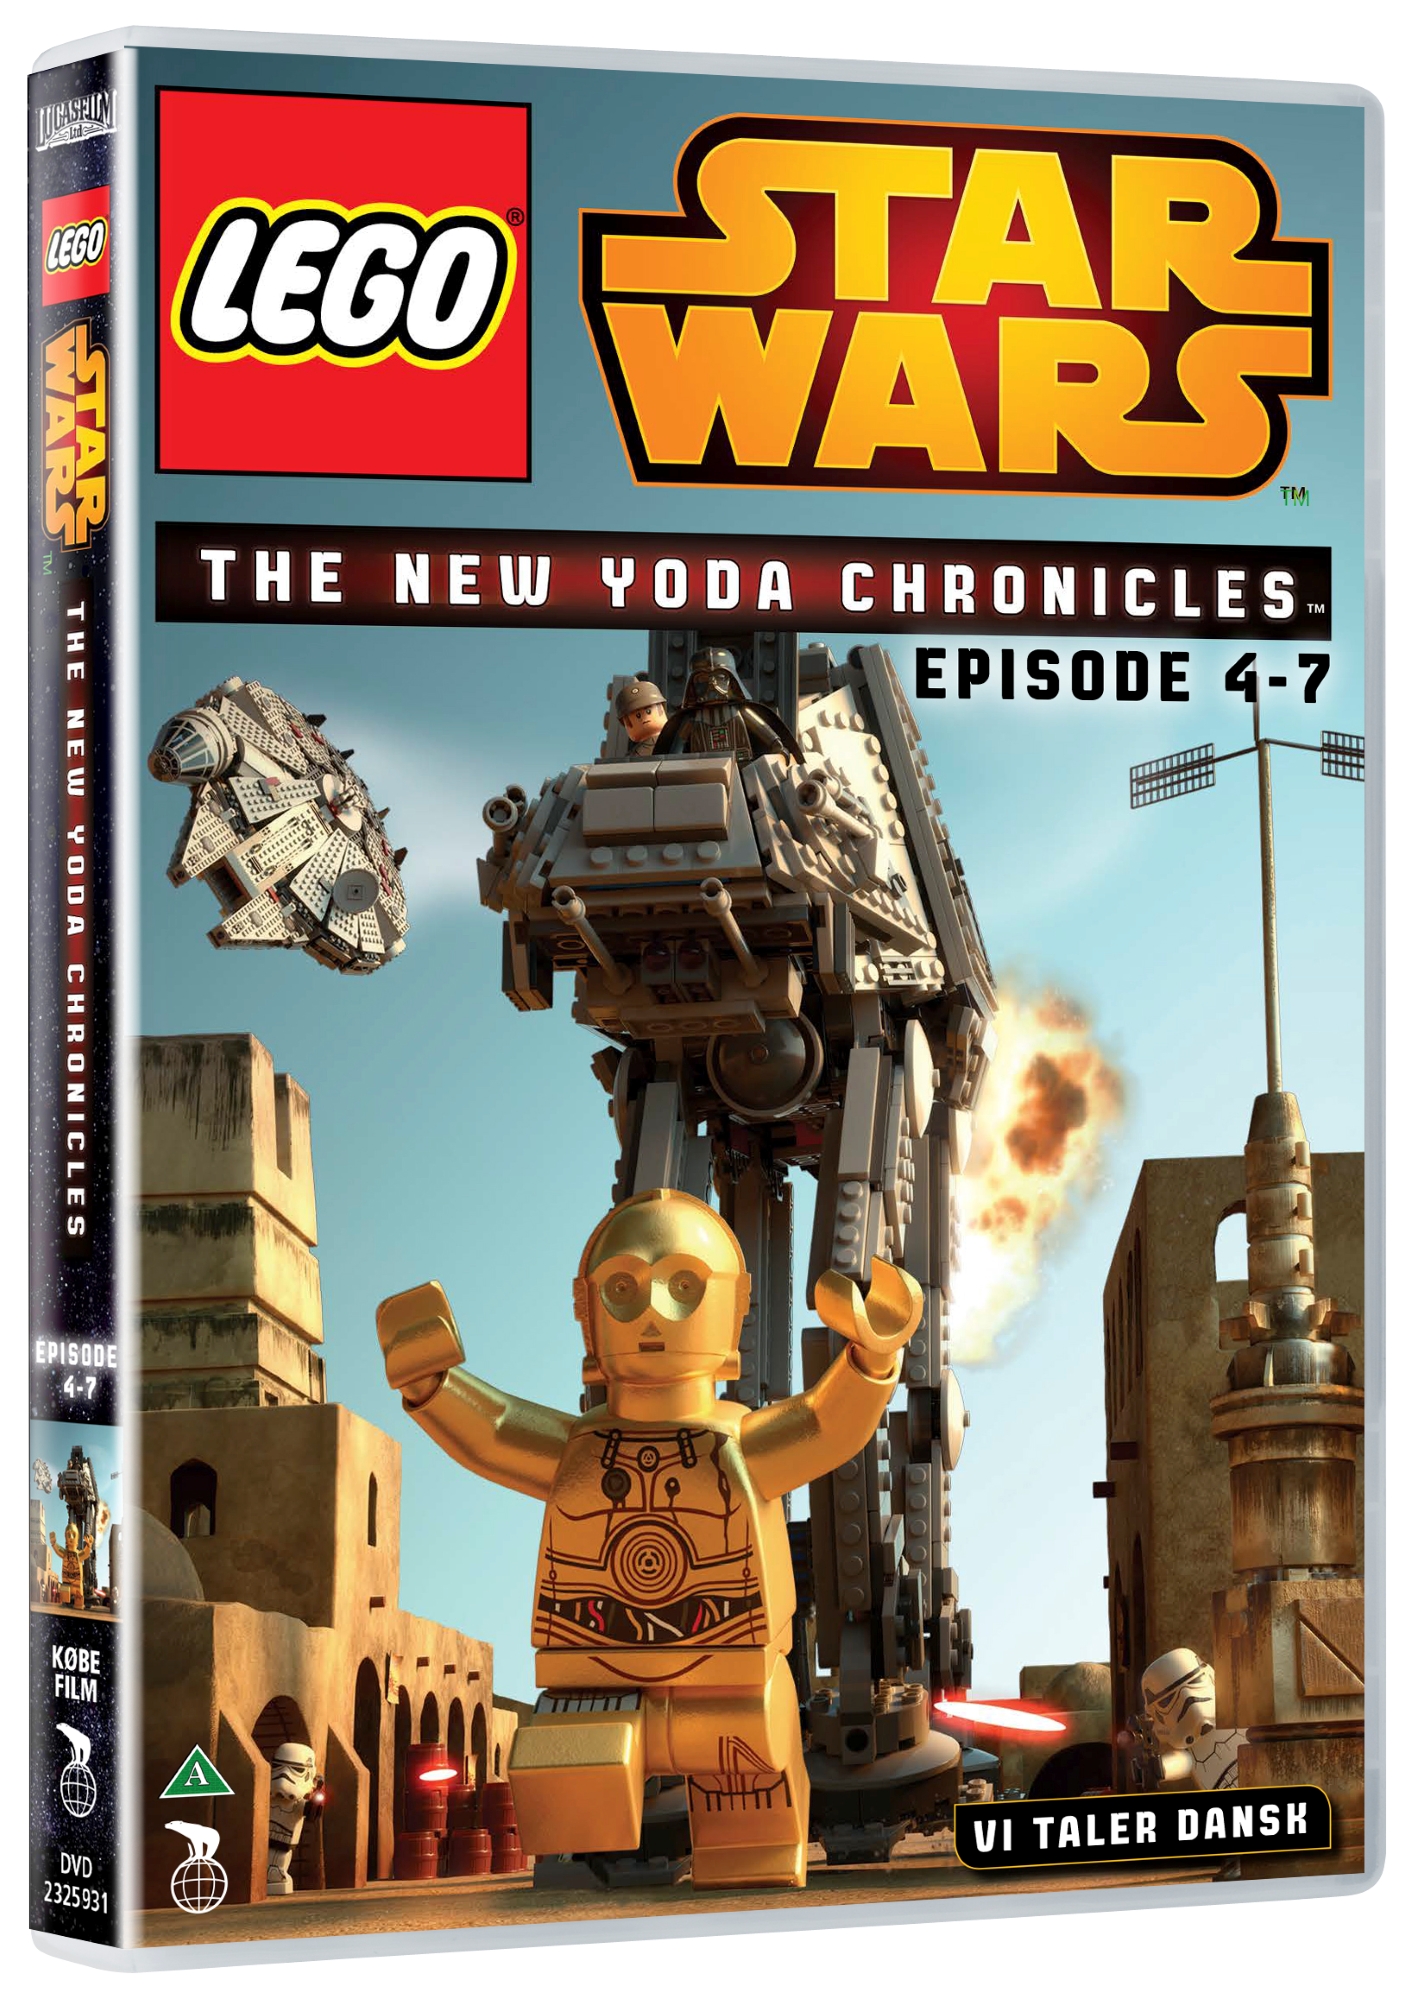 Aktuator sammenholdt snak Køb LEGO Star Wars: The Yoda Chronicles, Episode 4-7 - DVD